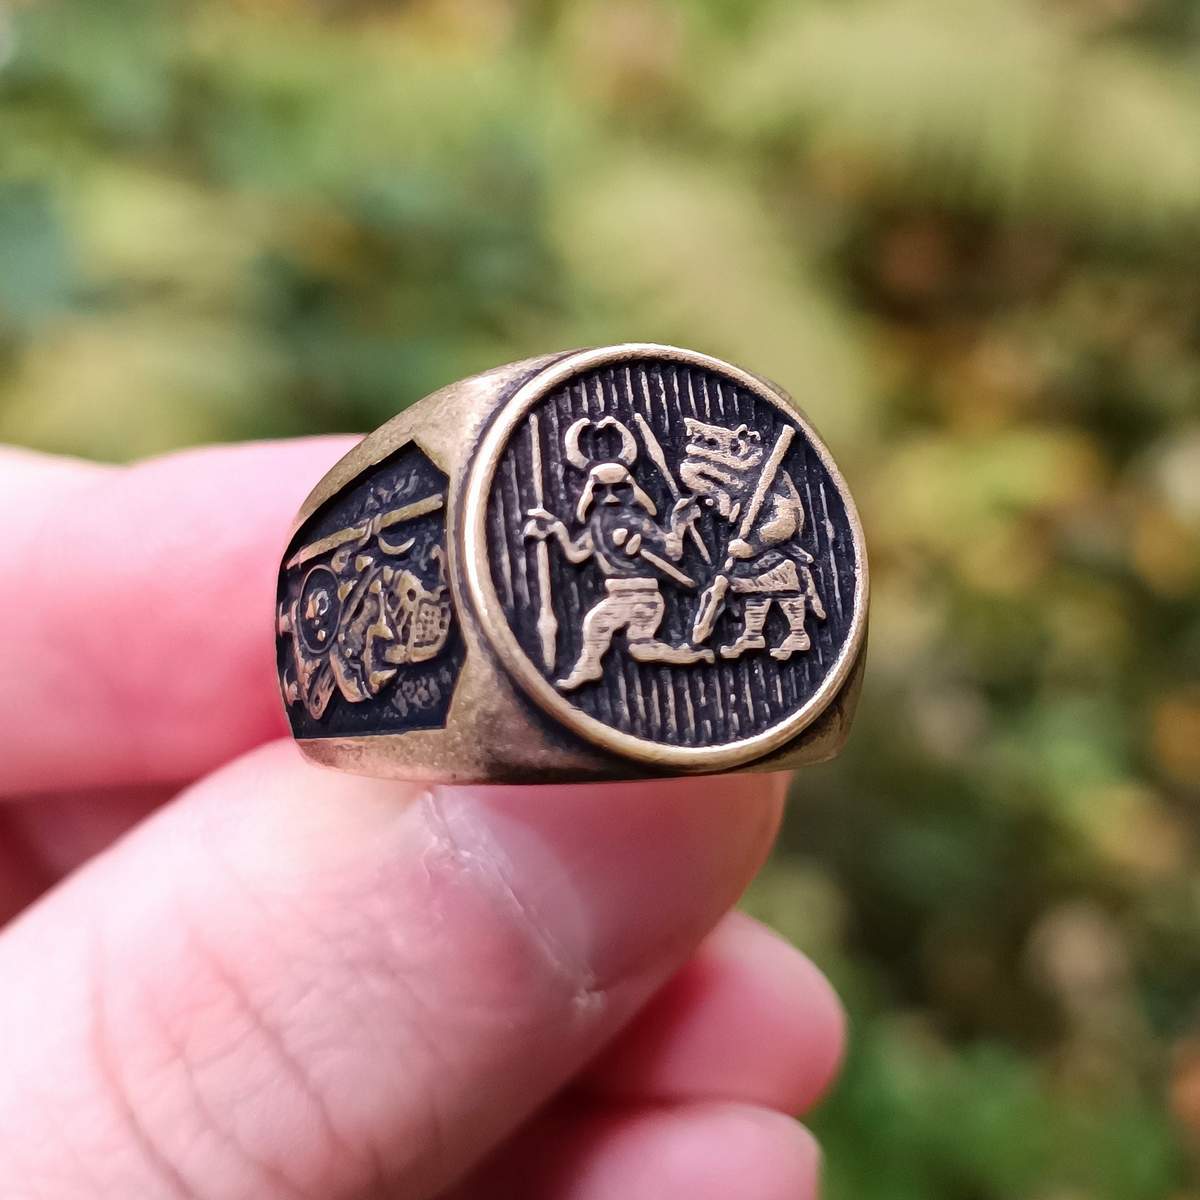 Torslunda dancer ring from bronze   